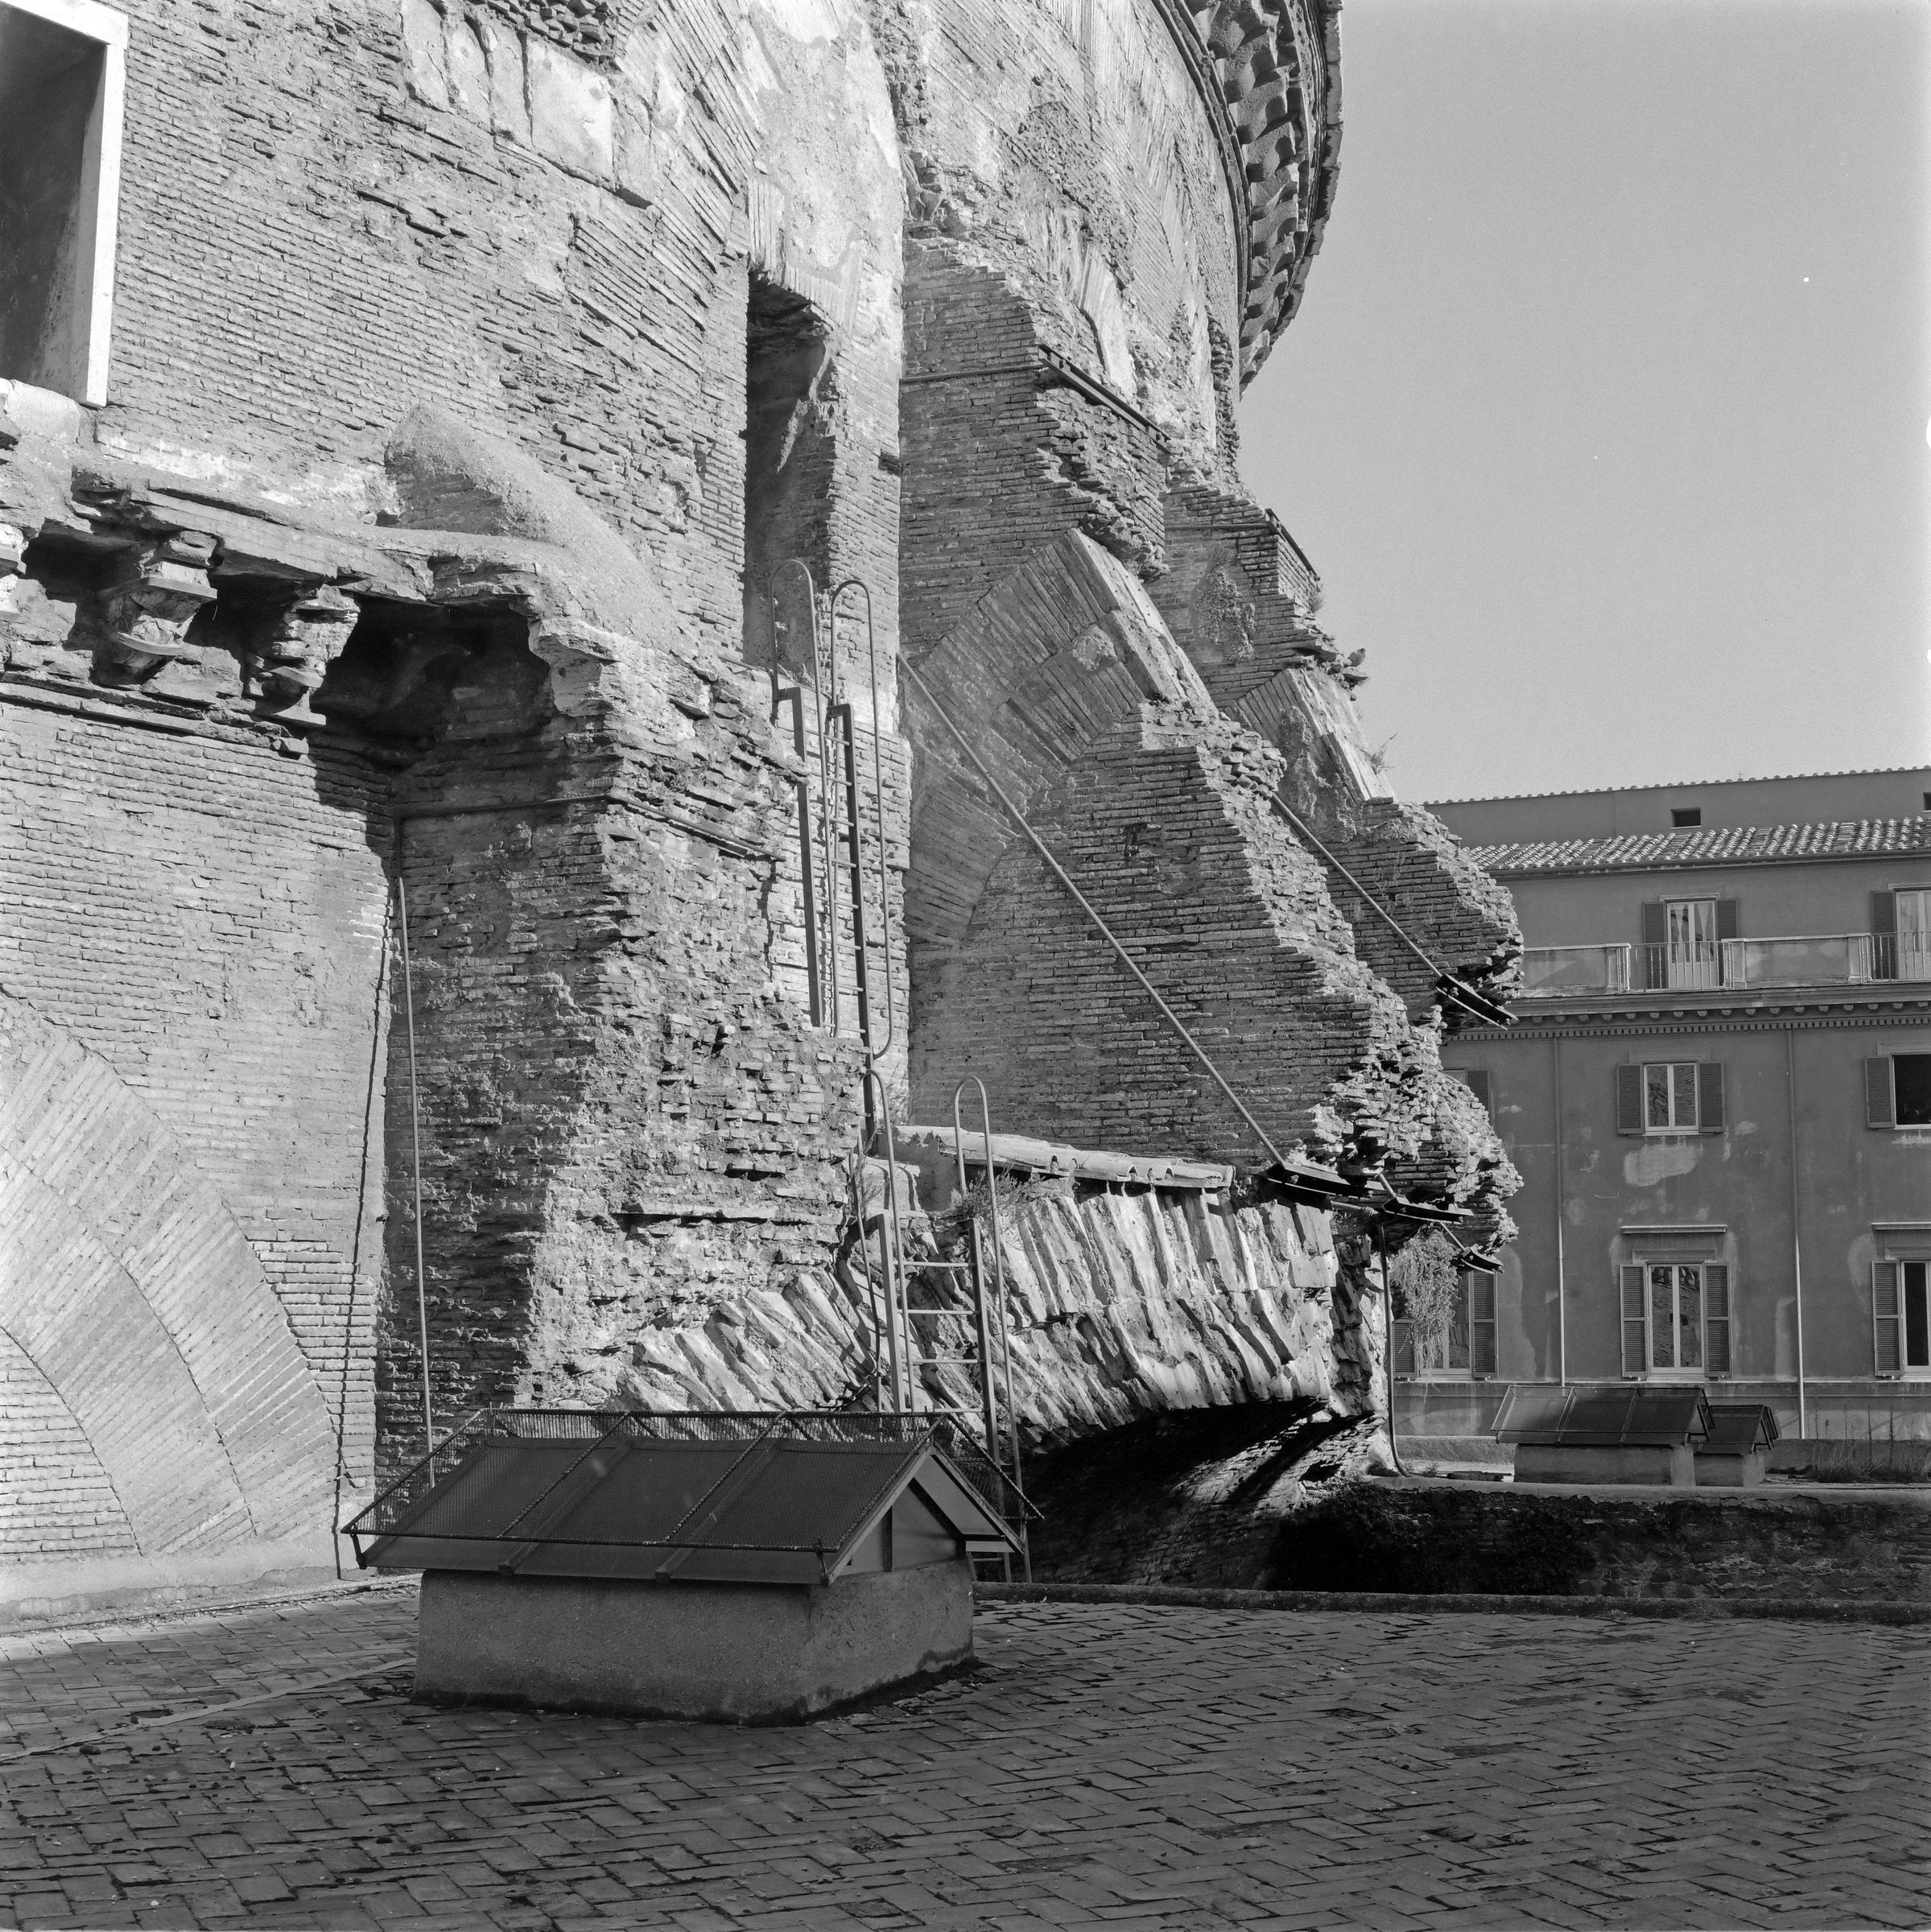 Fotografo non identificato, Pantheon; Pantheon (Chiesa di S. Maria ad Martyres), 1951-2000, gelatina ai sali d'argento, 6x6 cm, N078708